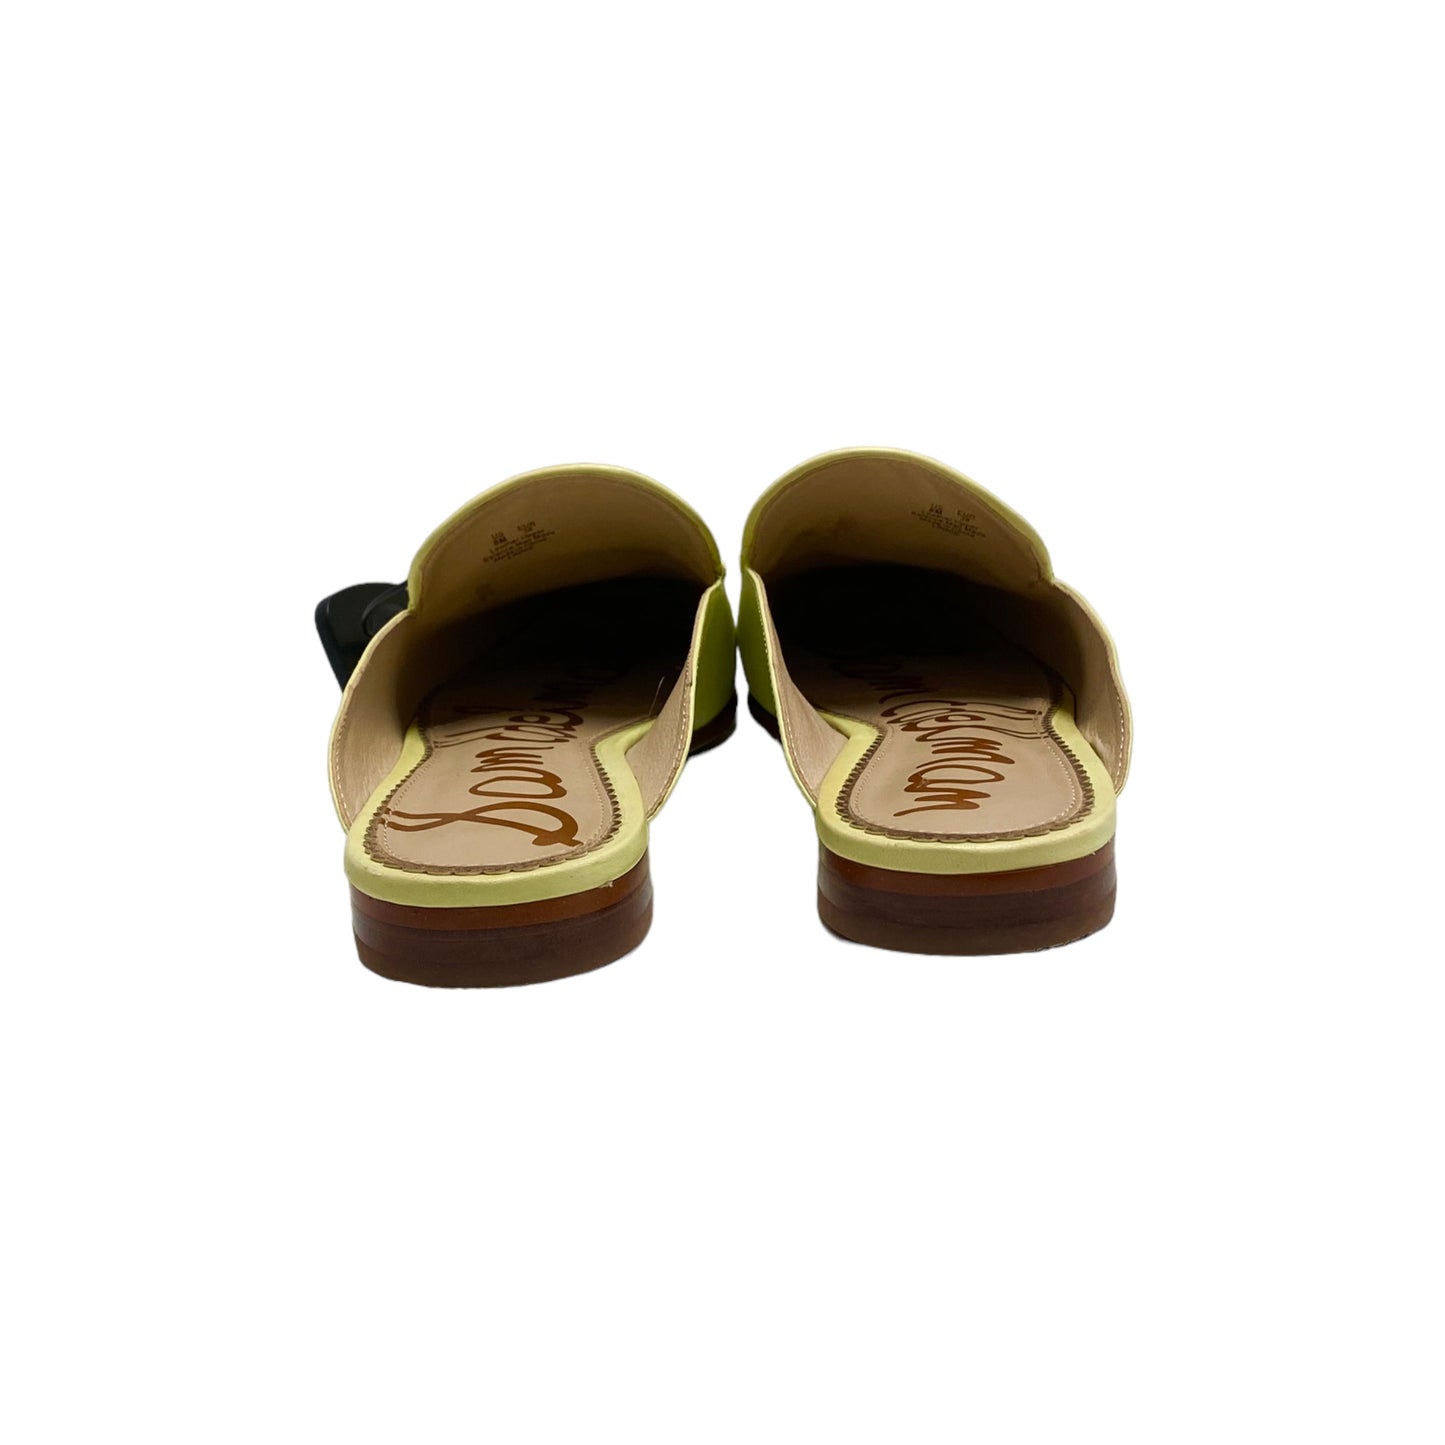 Shoes Flats Mule & Slide By Sam Edelman  Size: 8